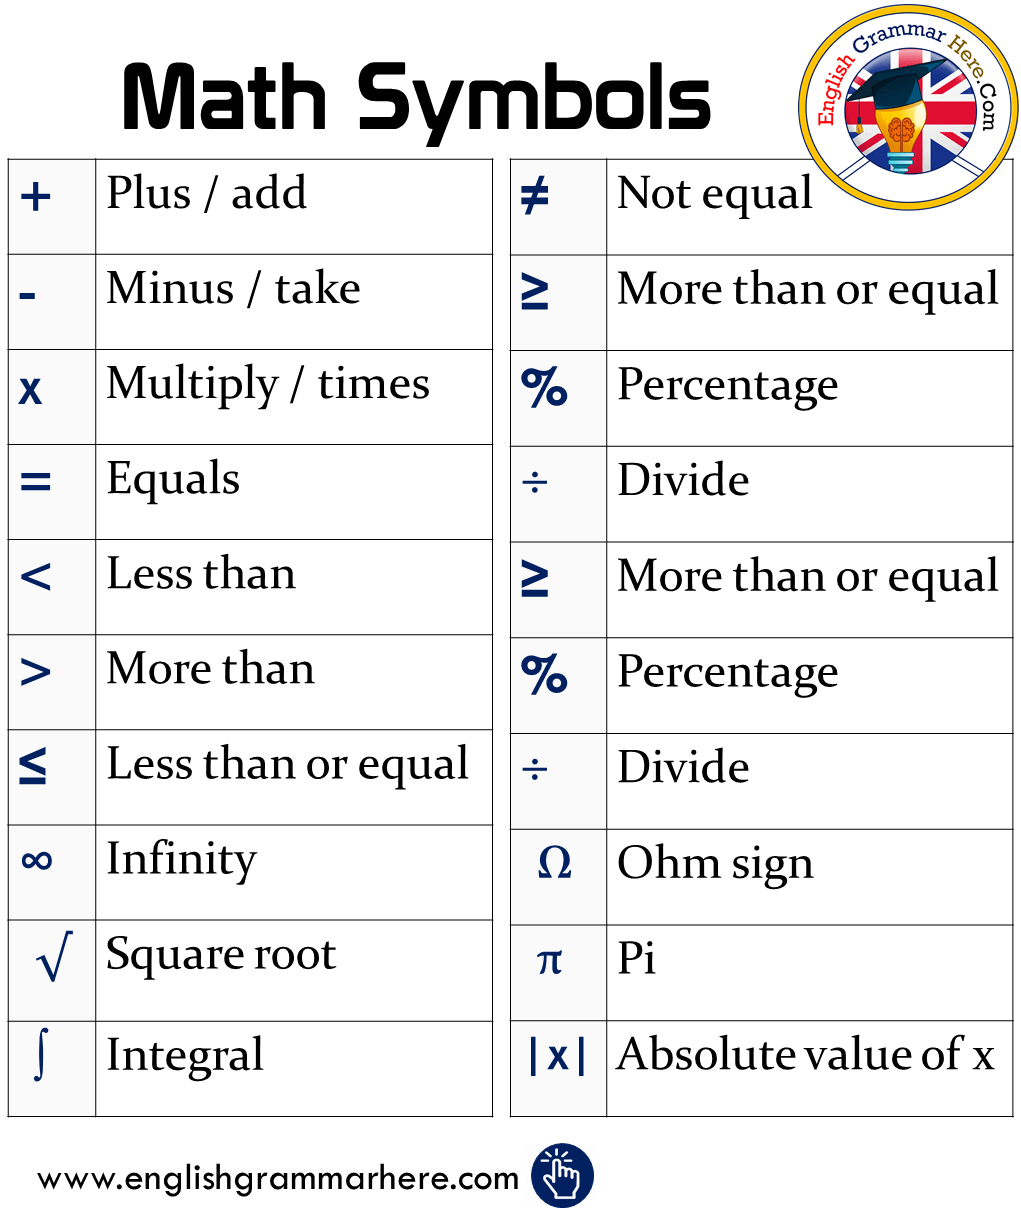 Math Symbols List